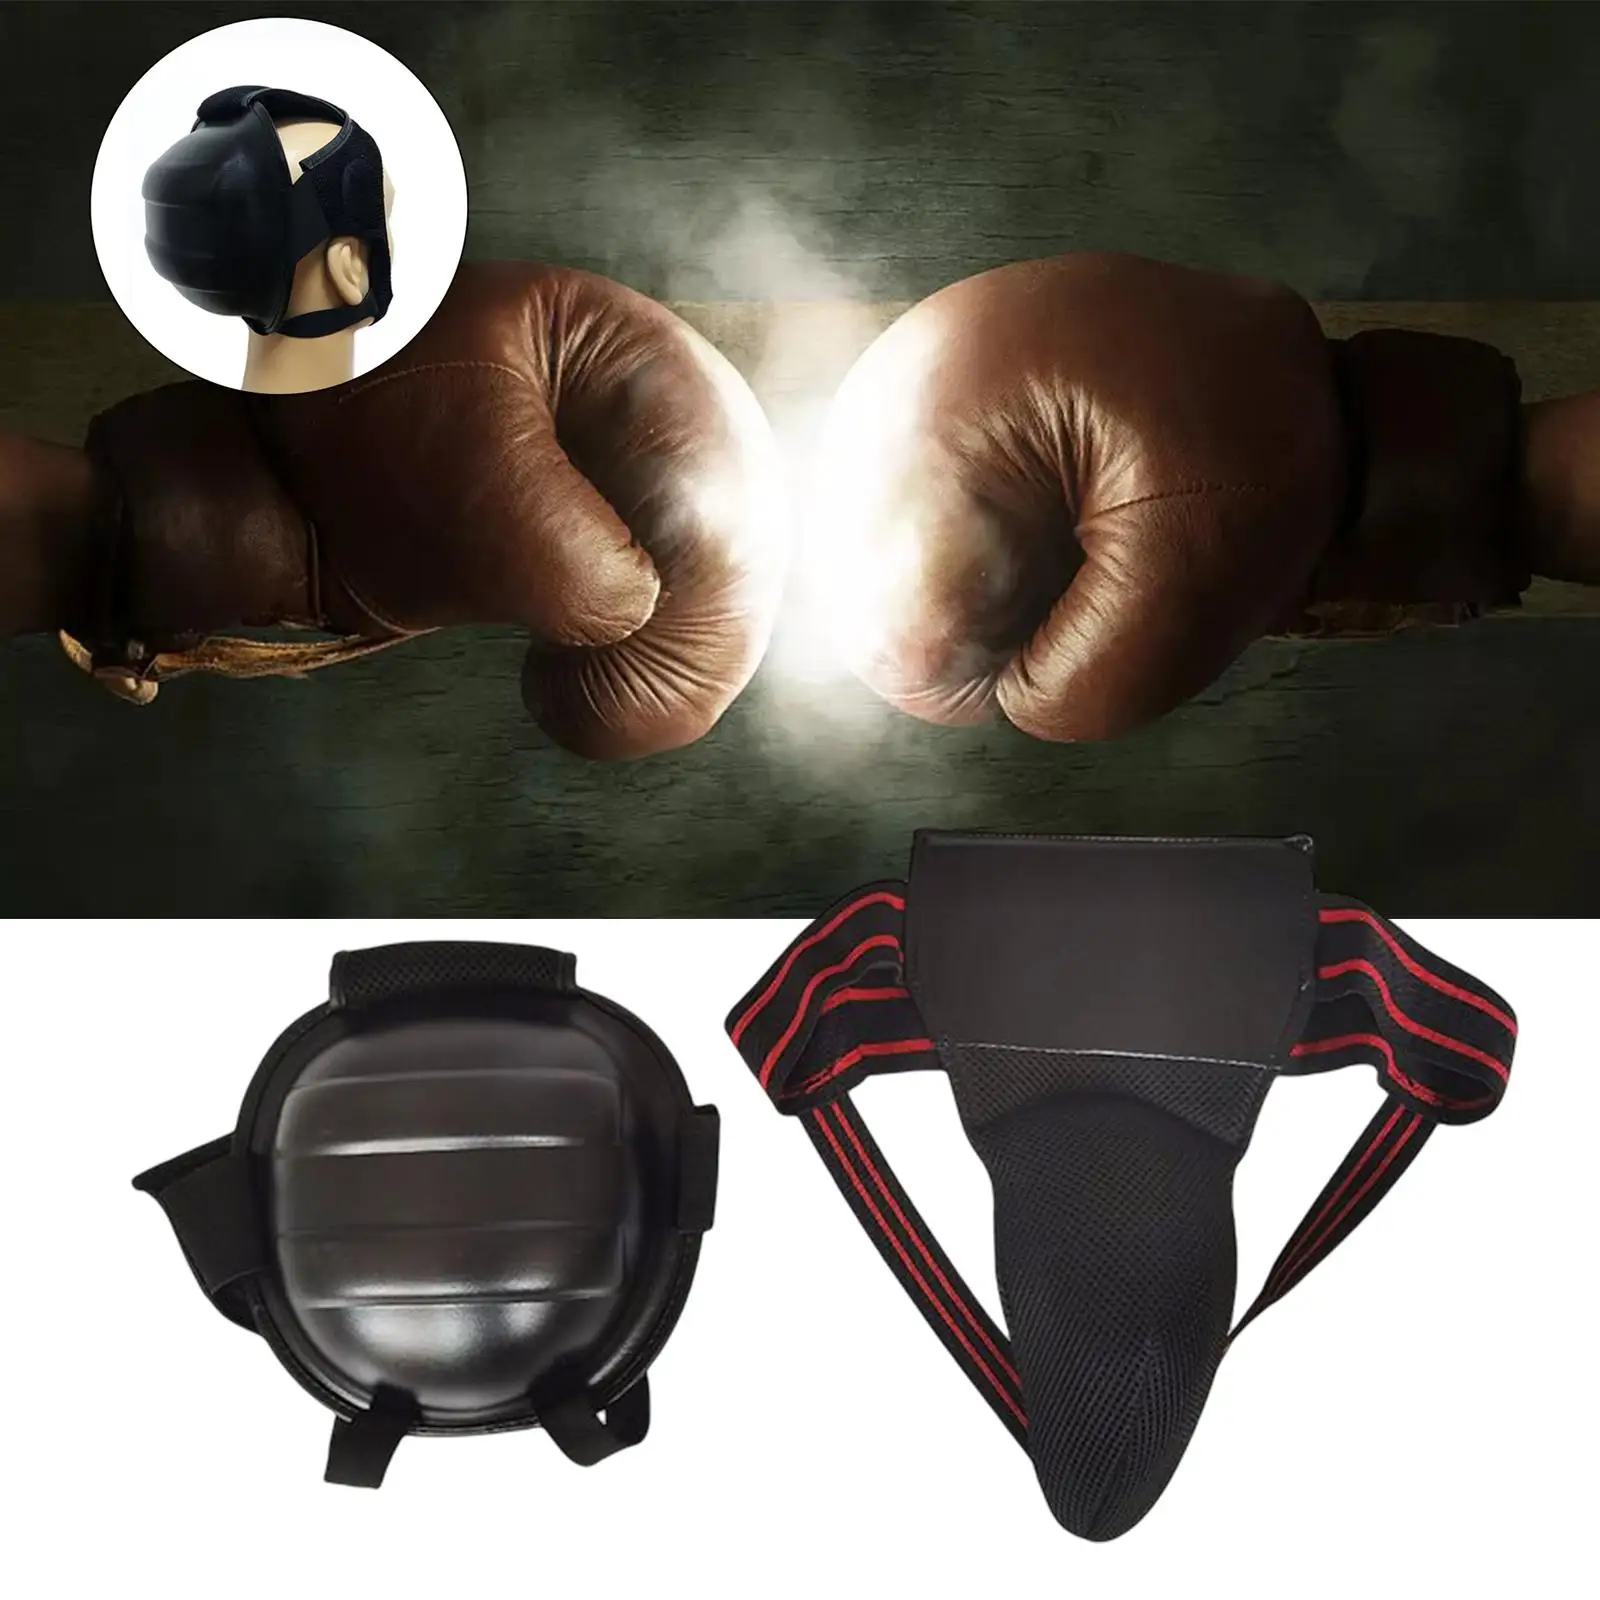 2Pcs Taekwondo Groin Protector Sanda Head Guard Adjustable Padded for Boxing Martial Arts MMA Fighting